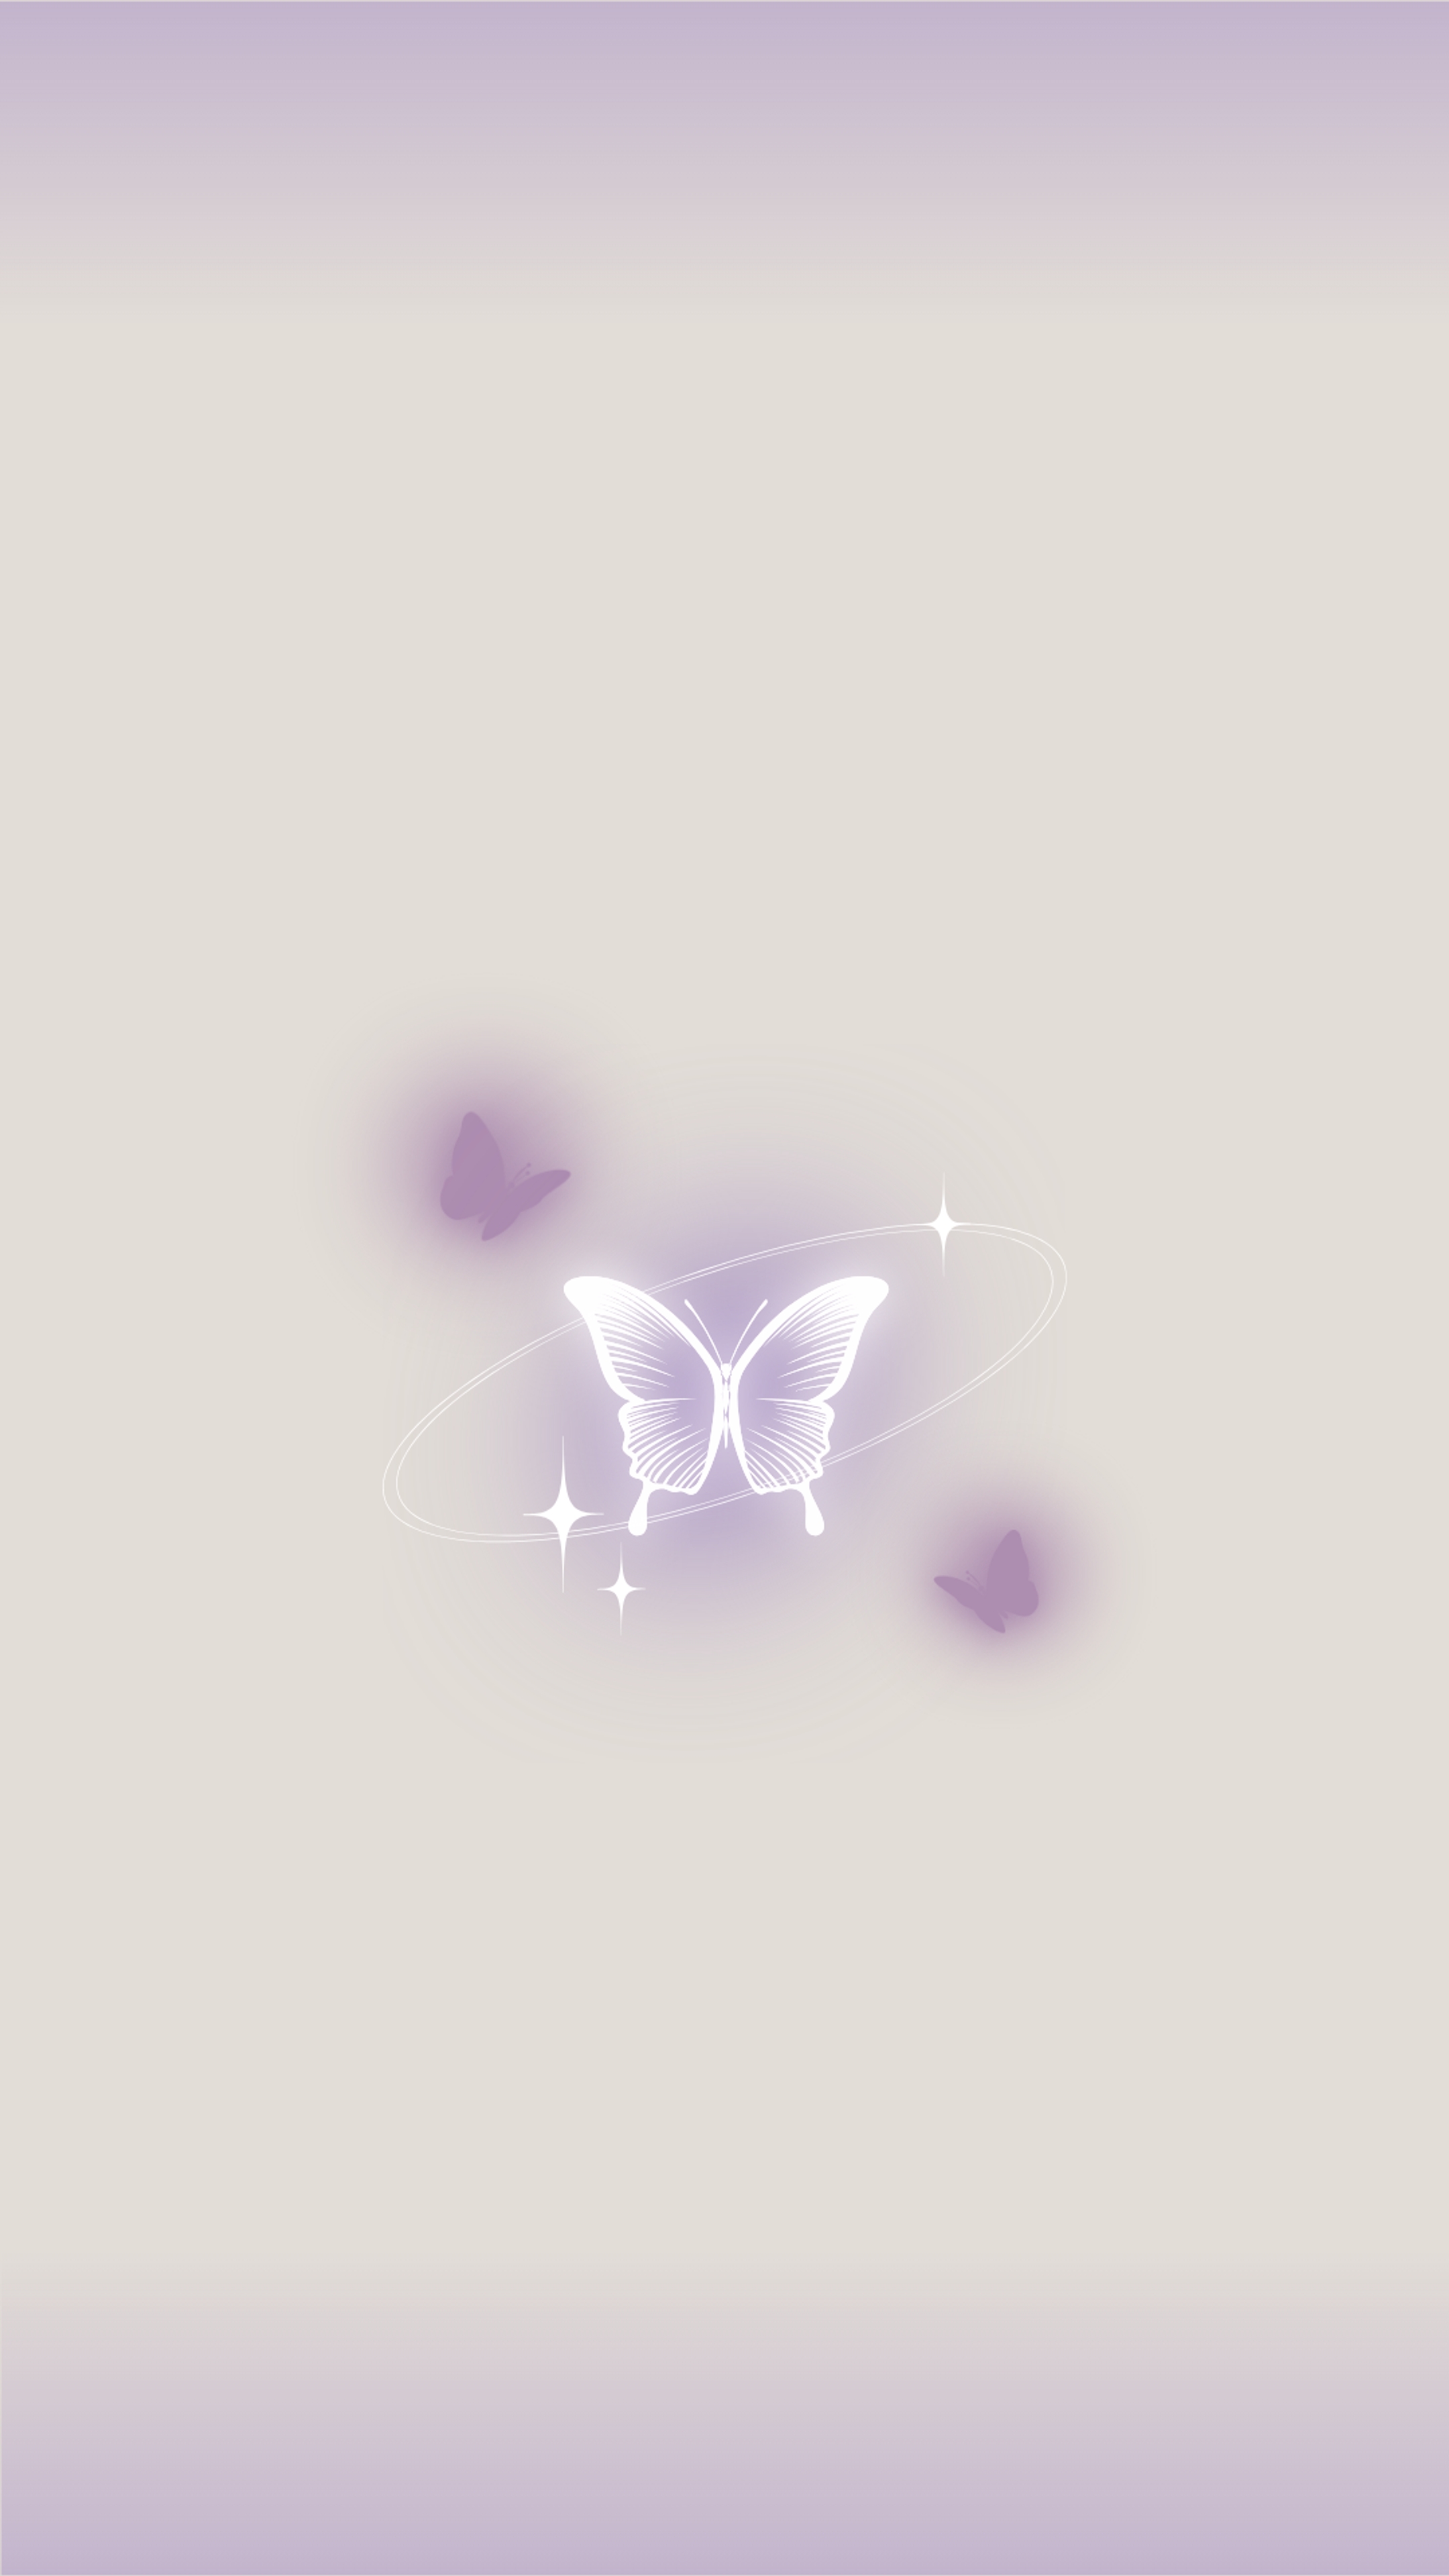 Shimmering Purple Butterflies on Soft Beige Background Hình nền[c2a86703d1a24467afd0]